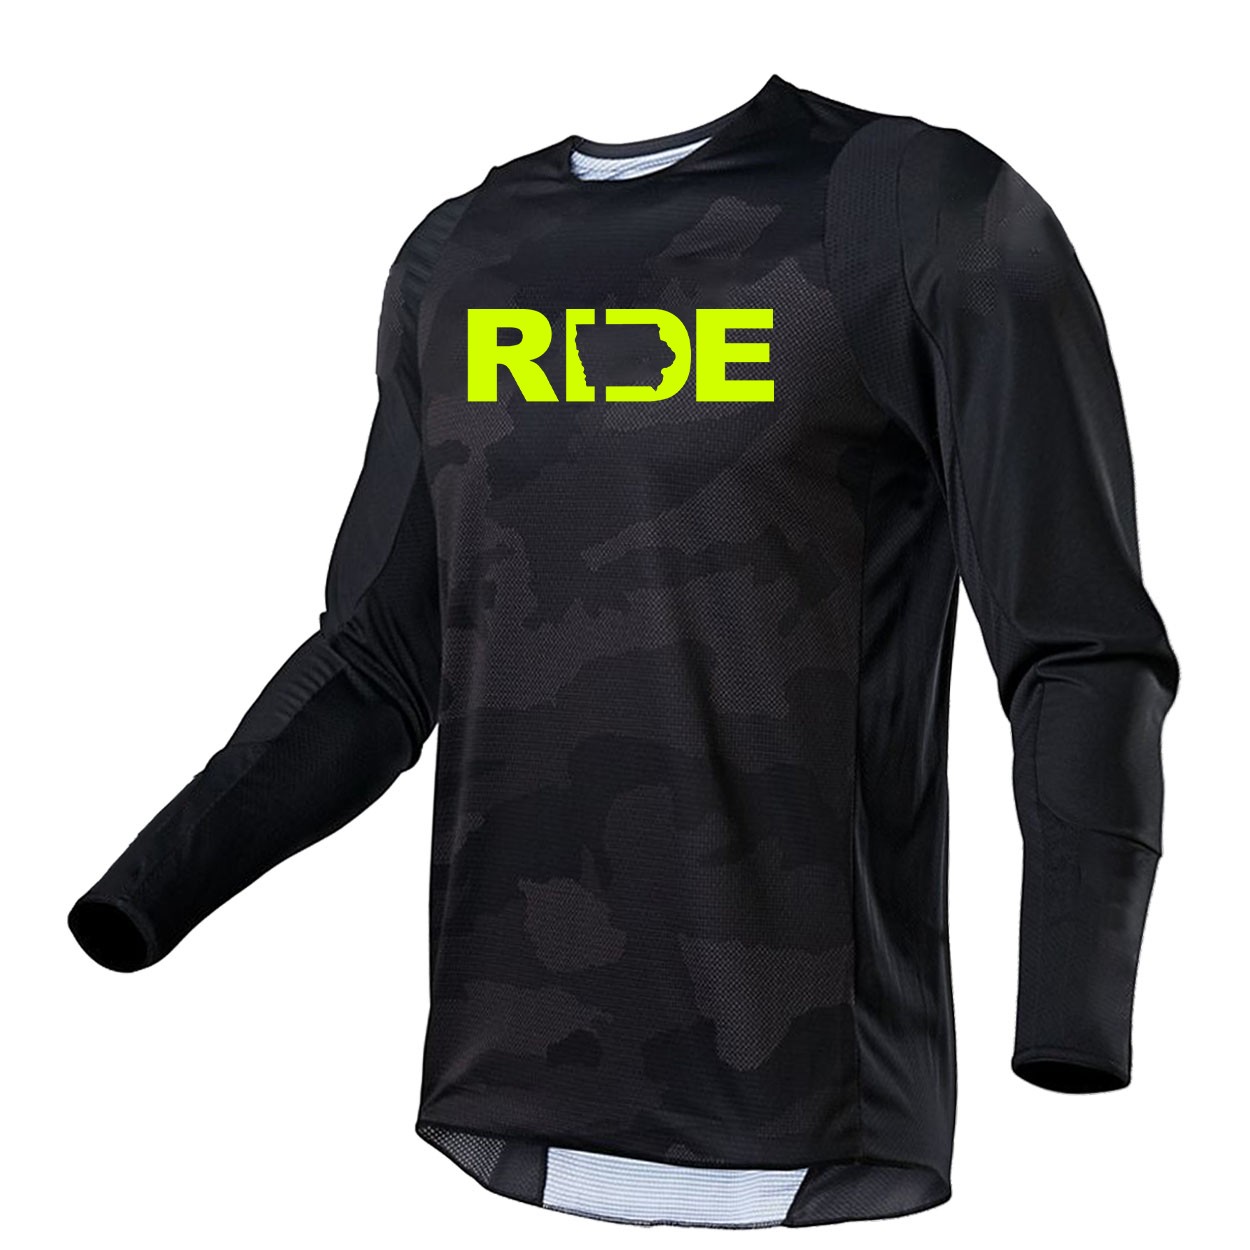 Ride Iowa Classic Performance Jersey Long Sleeve Shirt Black Camo (Hi-Vis Logo)